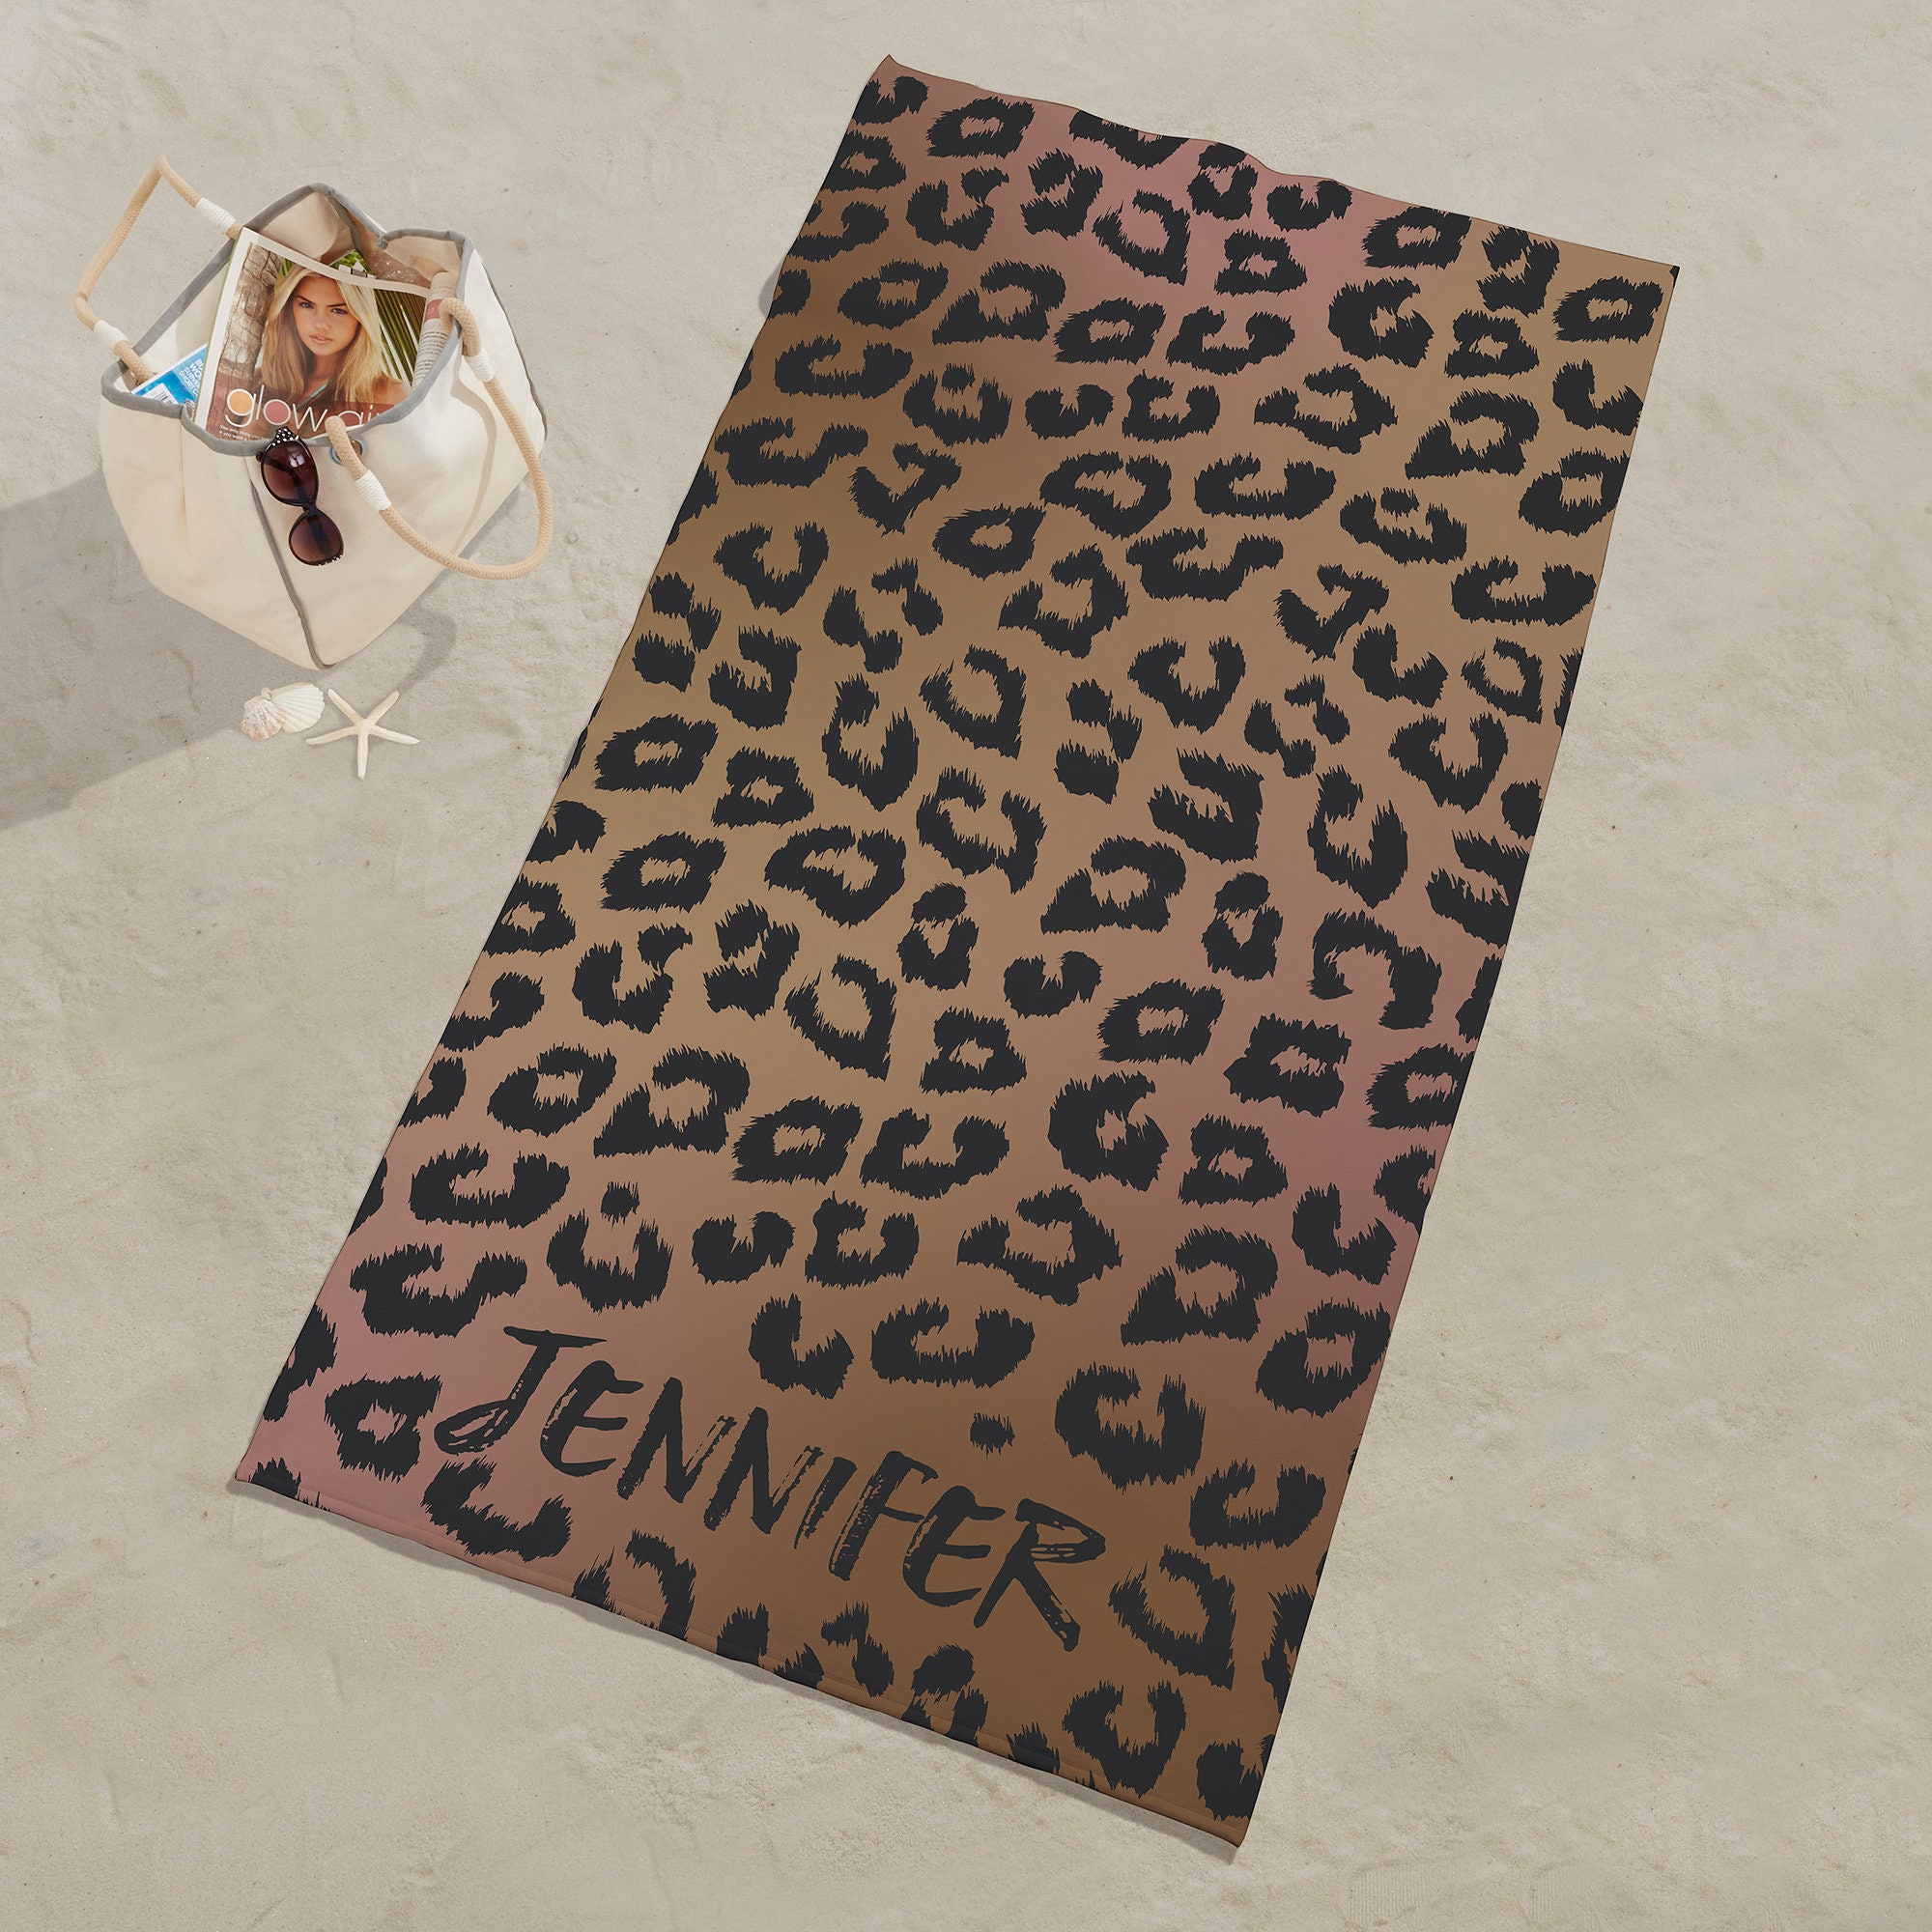  COTTON CRAFT Hand Towels - Set of 4 Animal Print Cheetah  Leopard Africa Safari Decorative Hand Towel - 100% Cotton Jacquard Luxury  Guest Towel - Soft Quick Dry Absorbent Bathroom Face